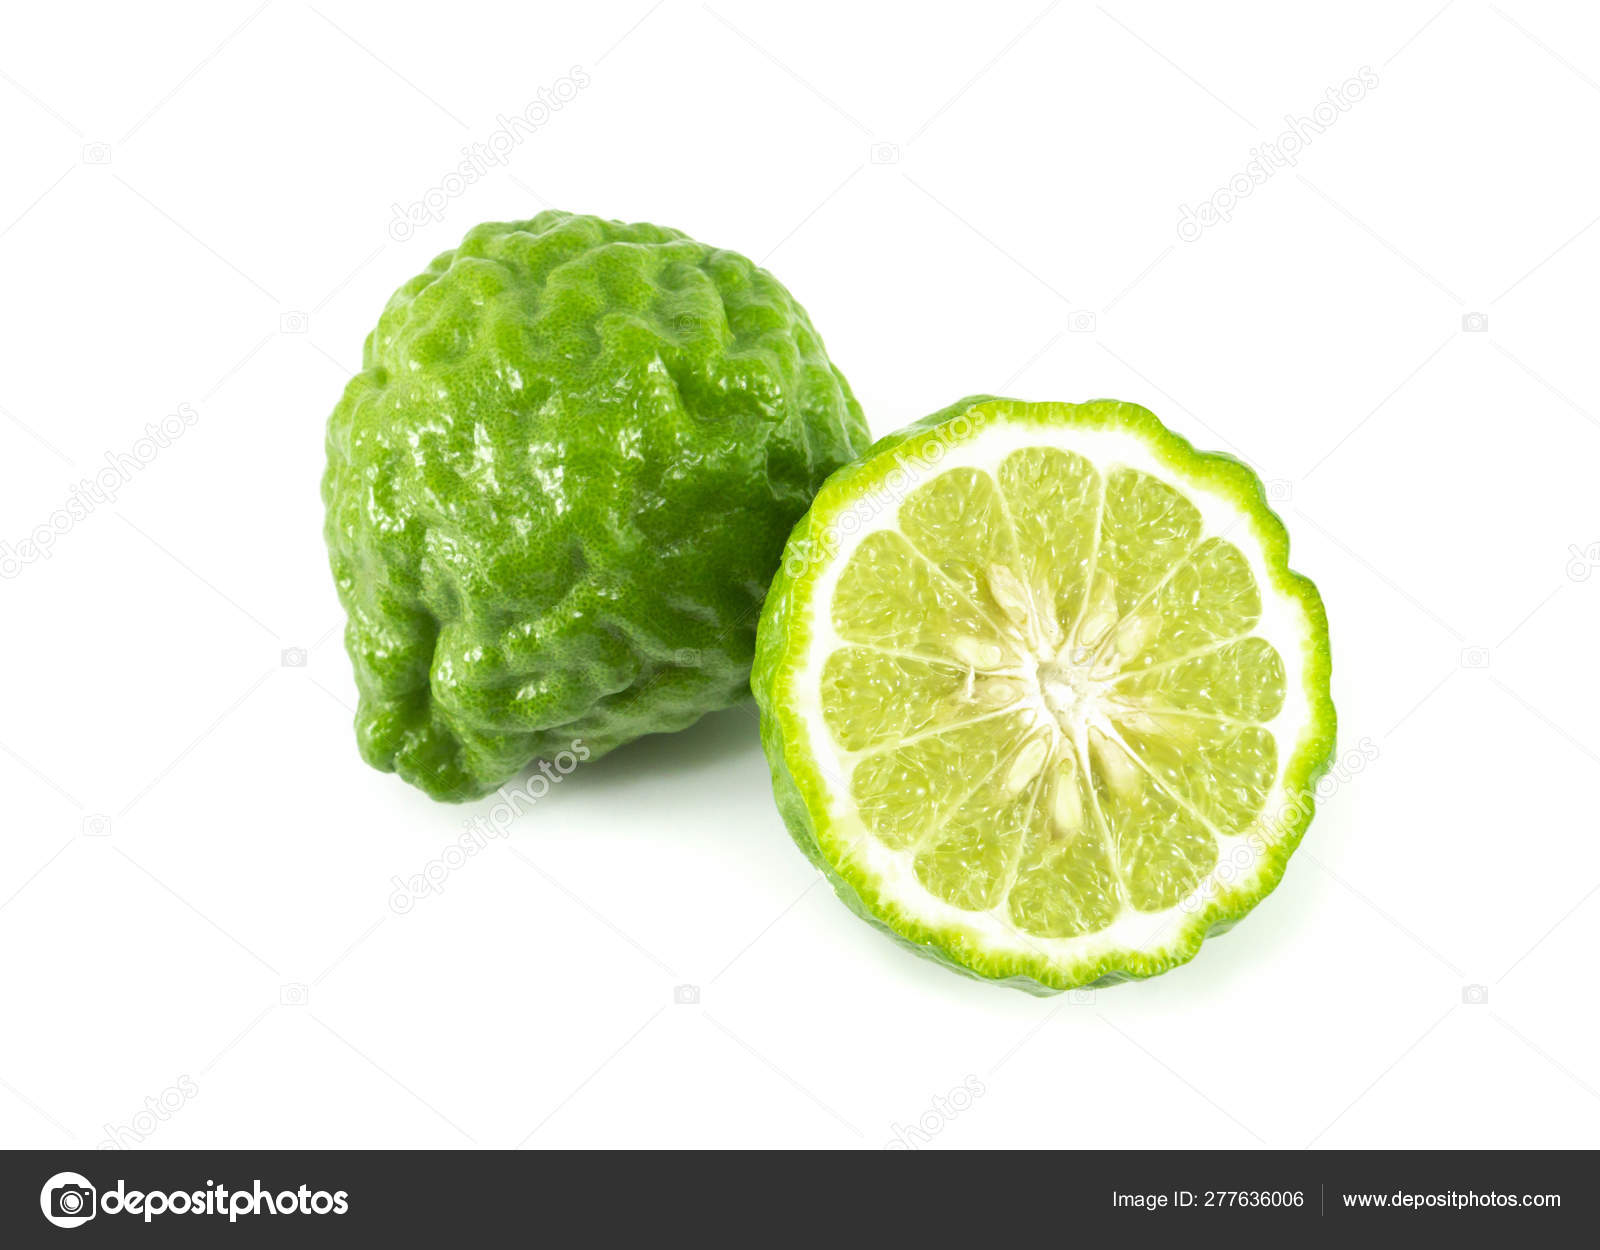 Fresh Bergamot Fruit Slice With Green Leaf Isolated On White Background Herb And Medical Stock Photo C Mraoraor 277636006